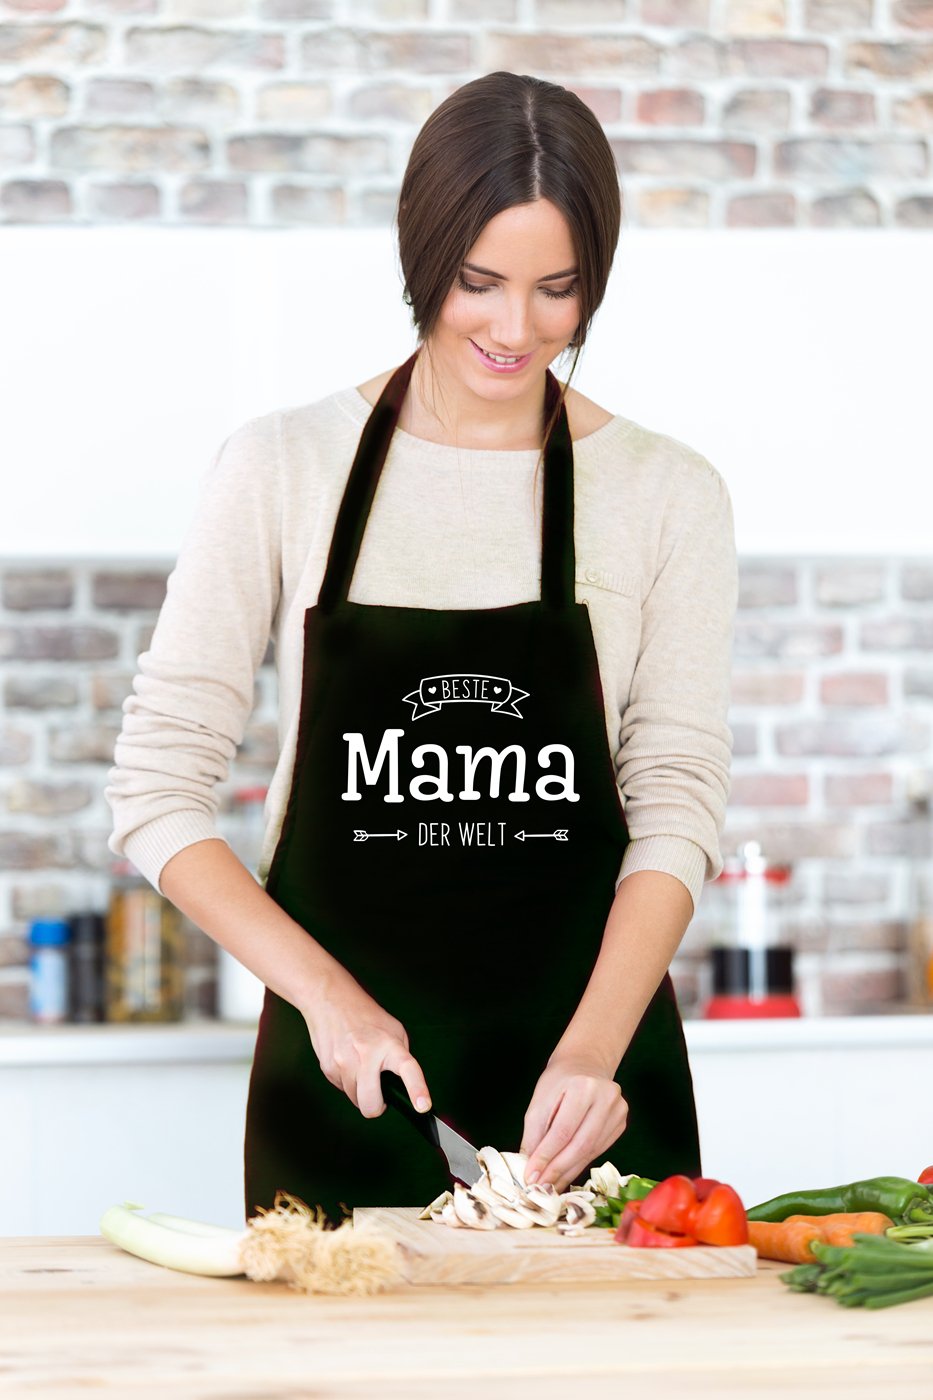 Bild: Kochschürze - Beste Mama der Welt Geschenkidee